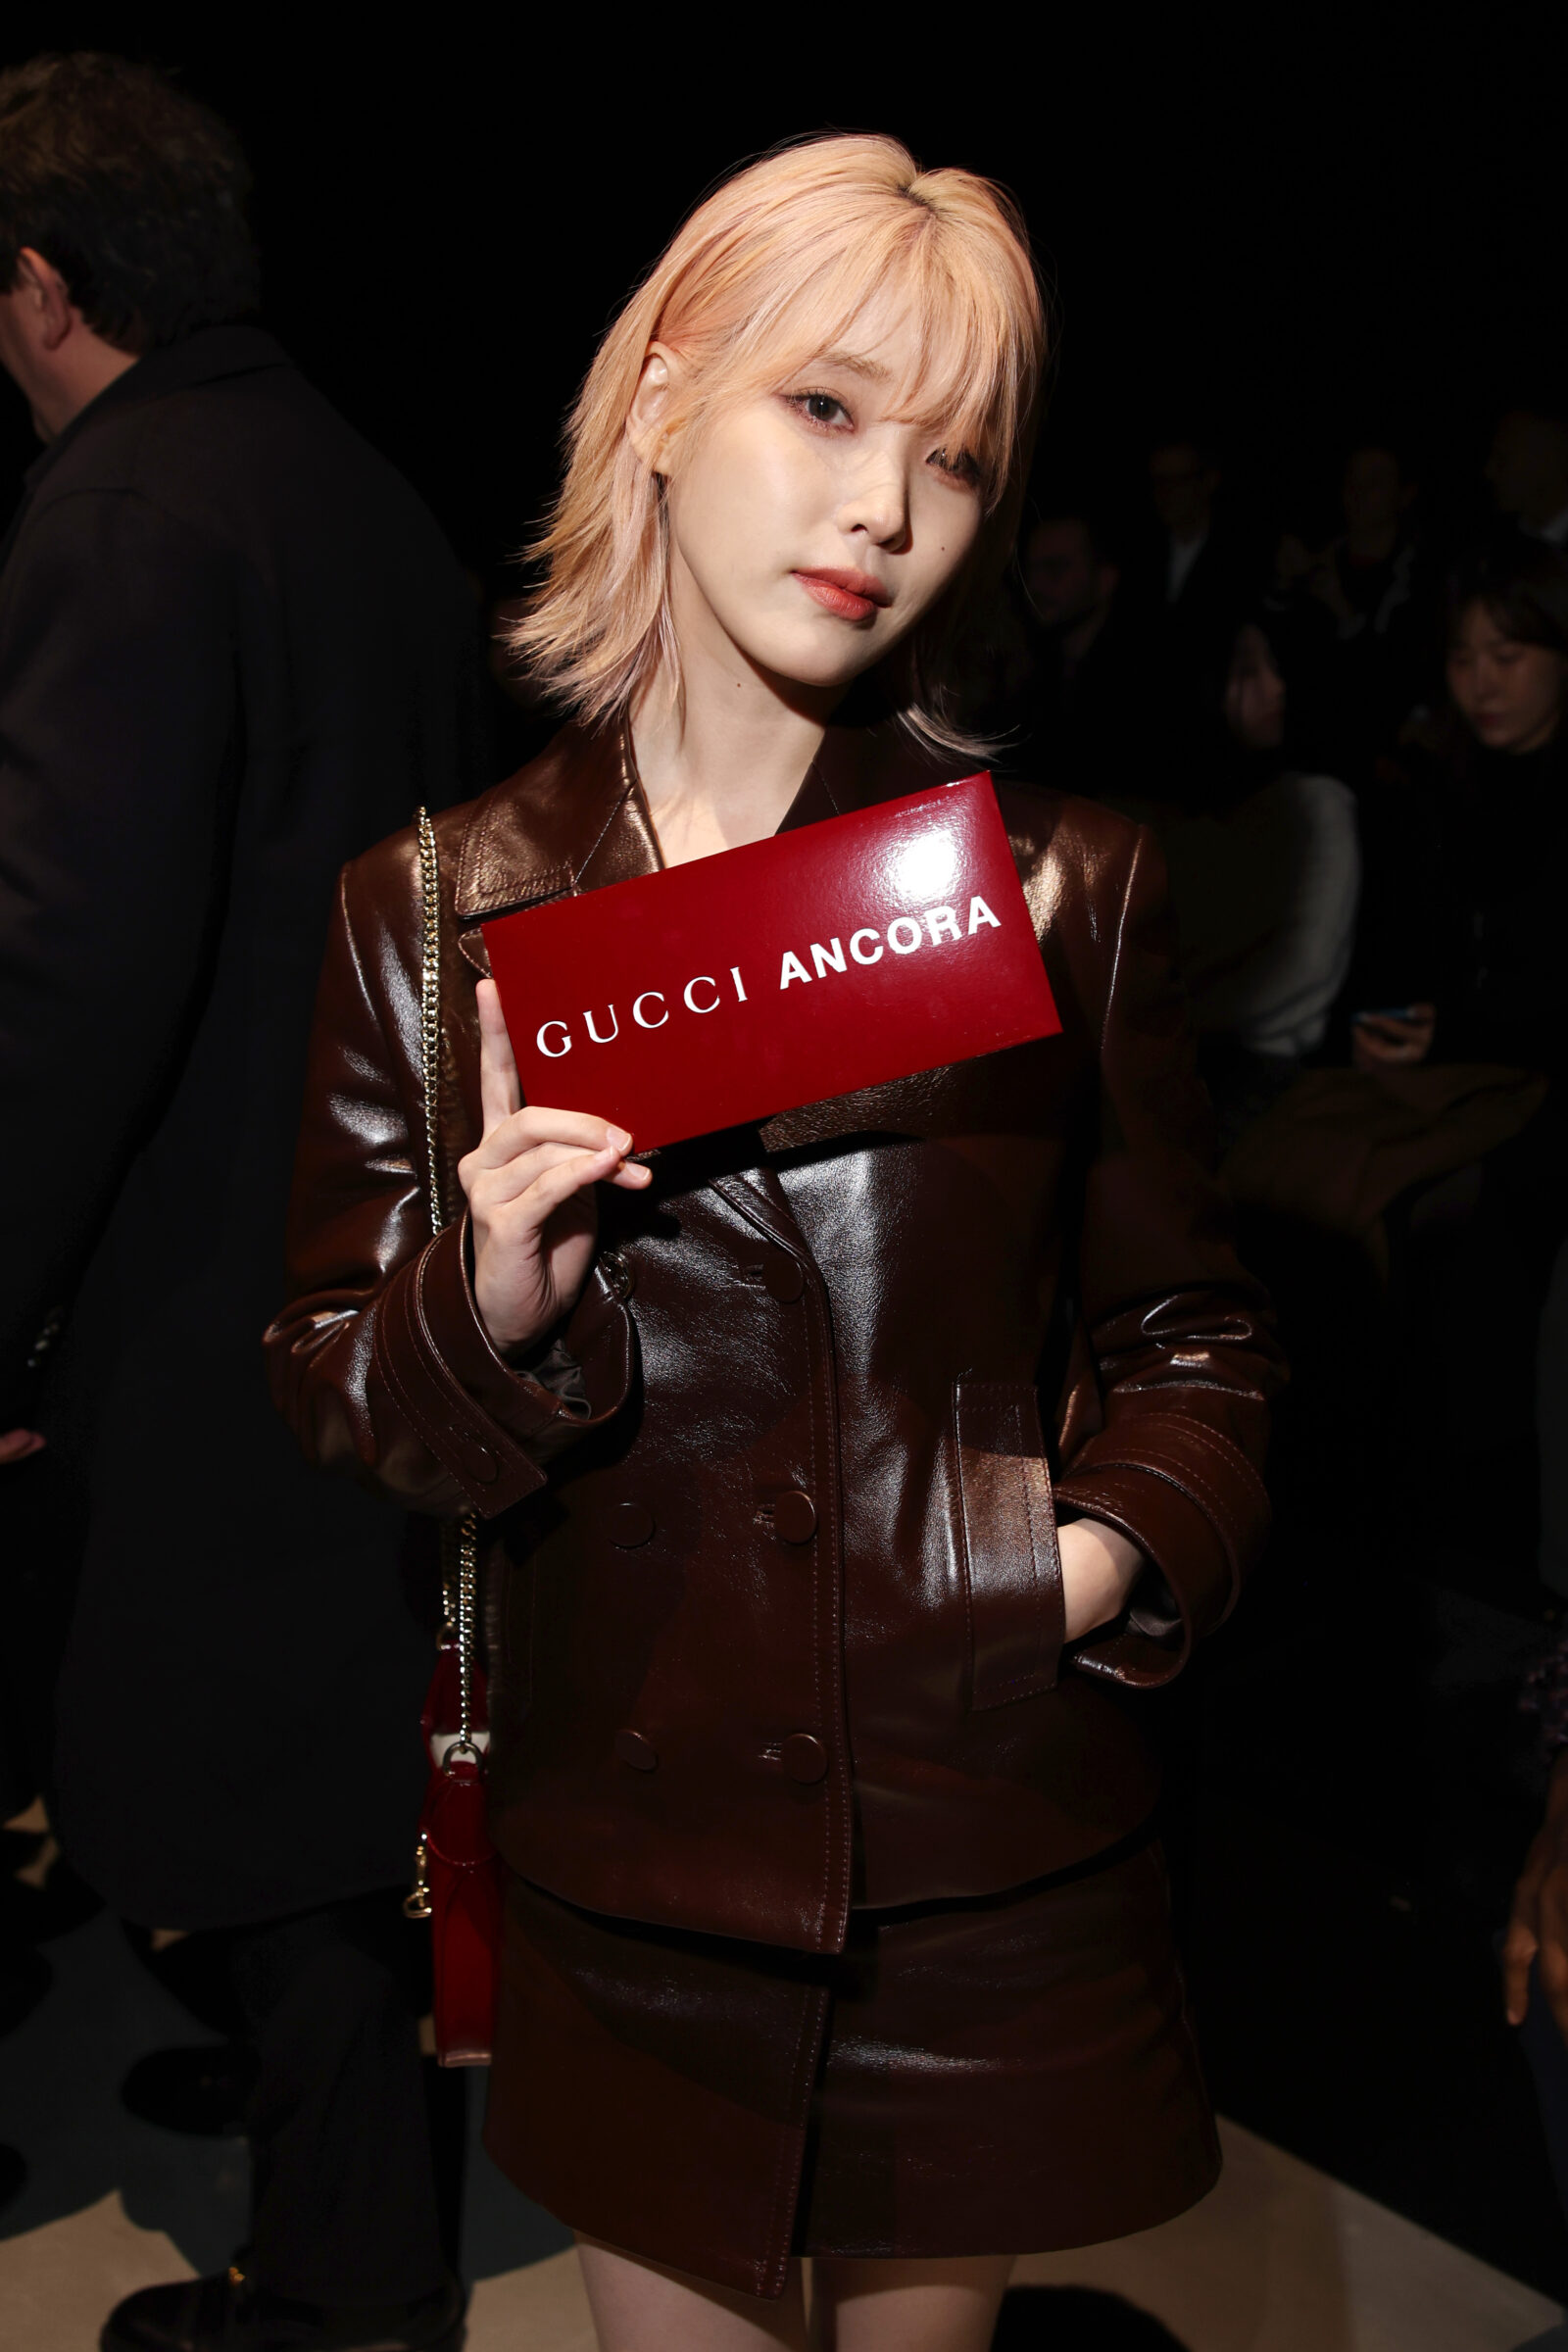 IU attends the Gucci Ancora Fashion Show during Milan Fashion Week Menswear 